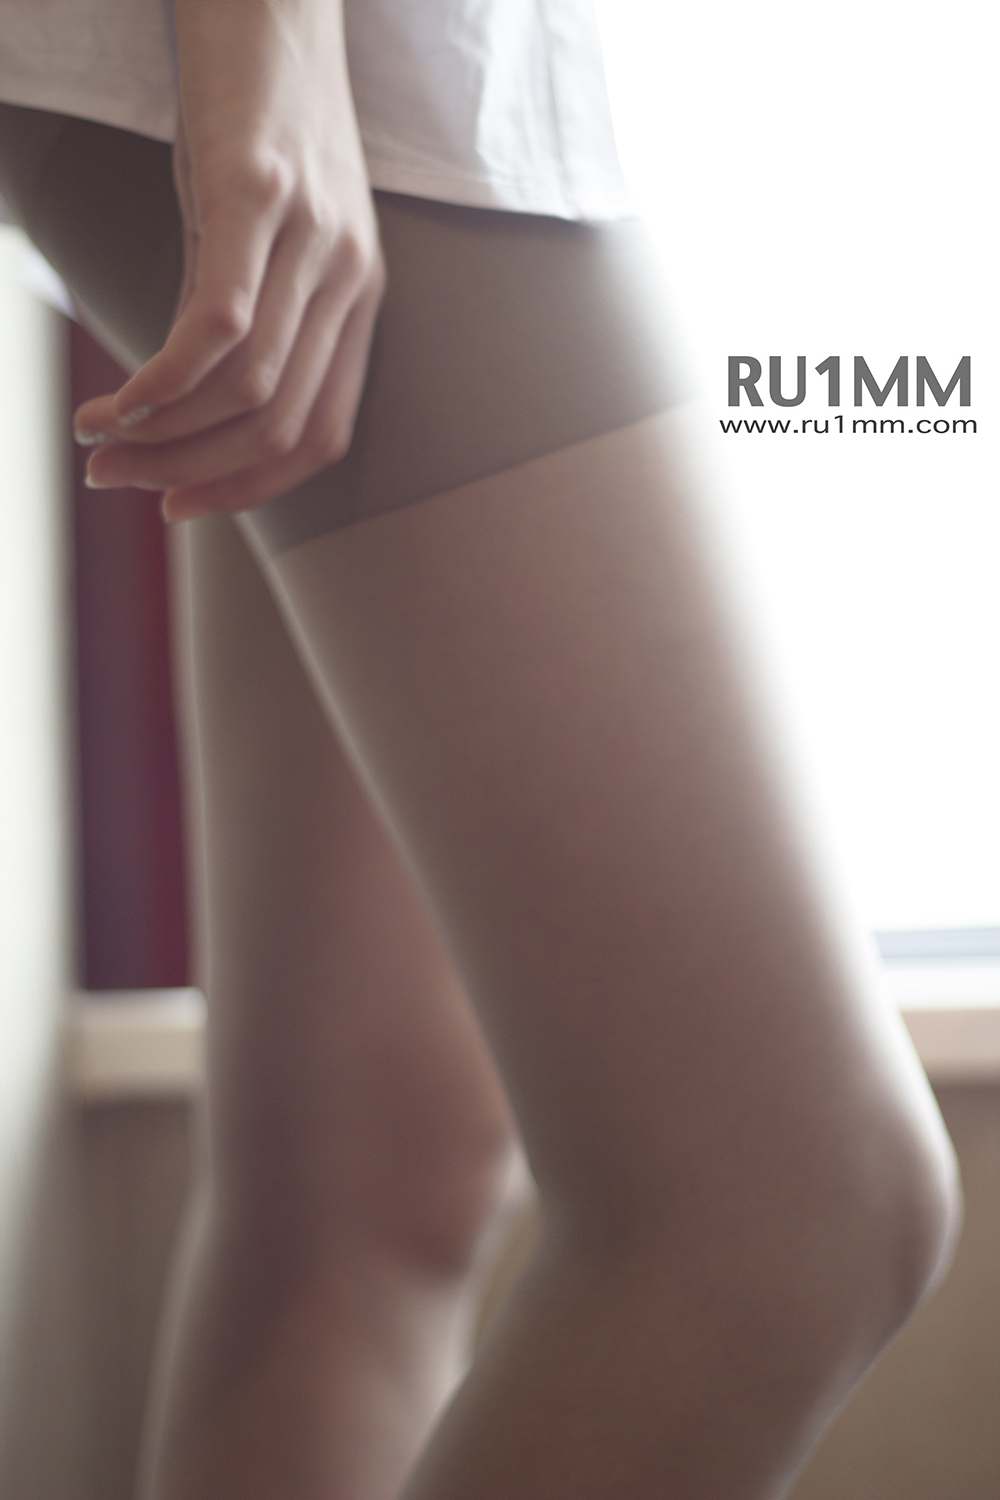 Ru1mm silk stockings tempt beautiful women